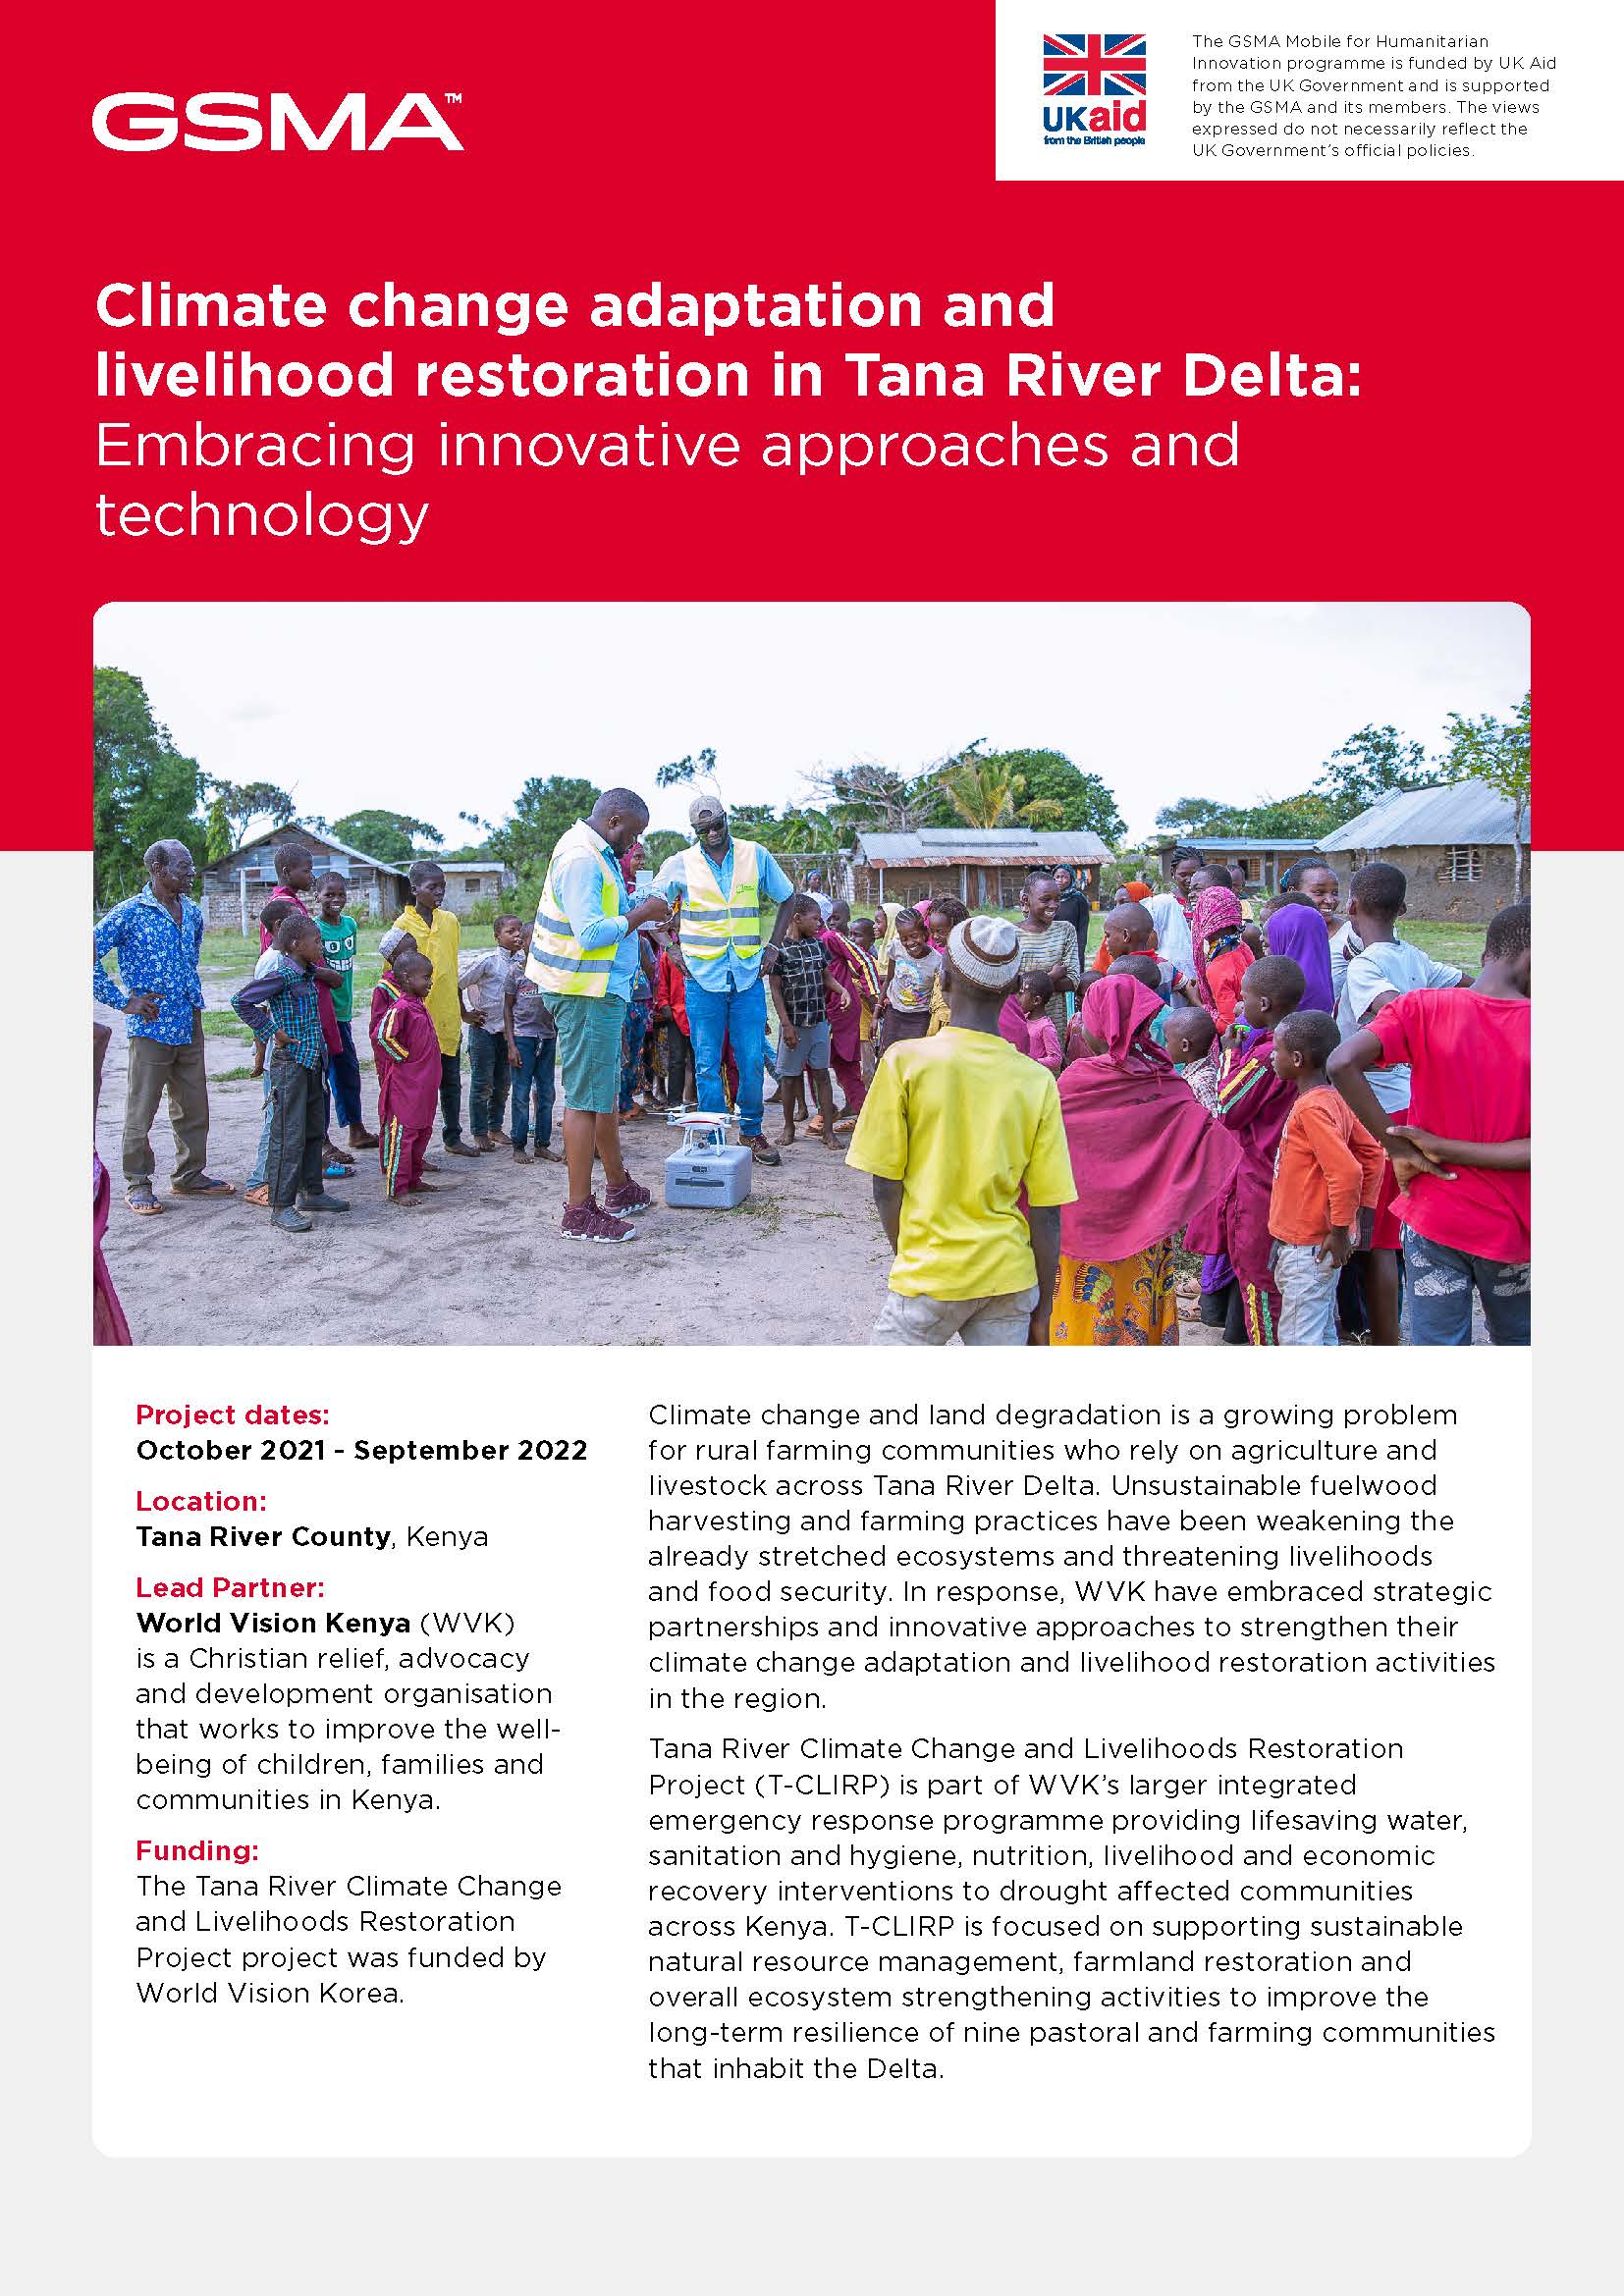 Climate change adaptation and livelihood restoration in Tana River Delta image